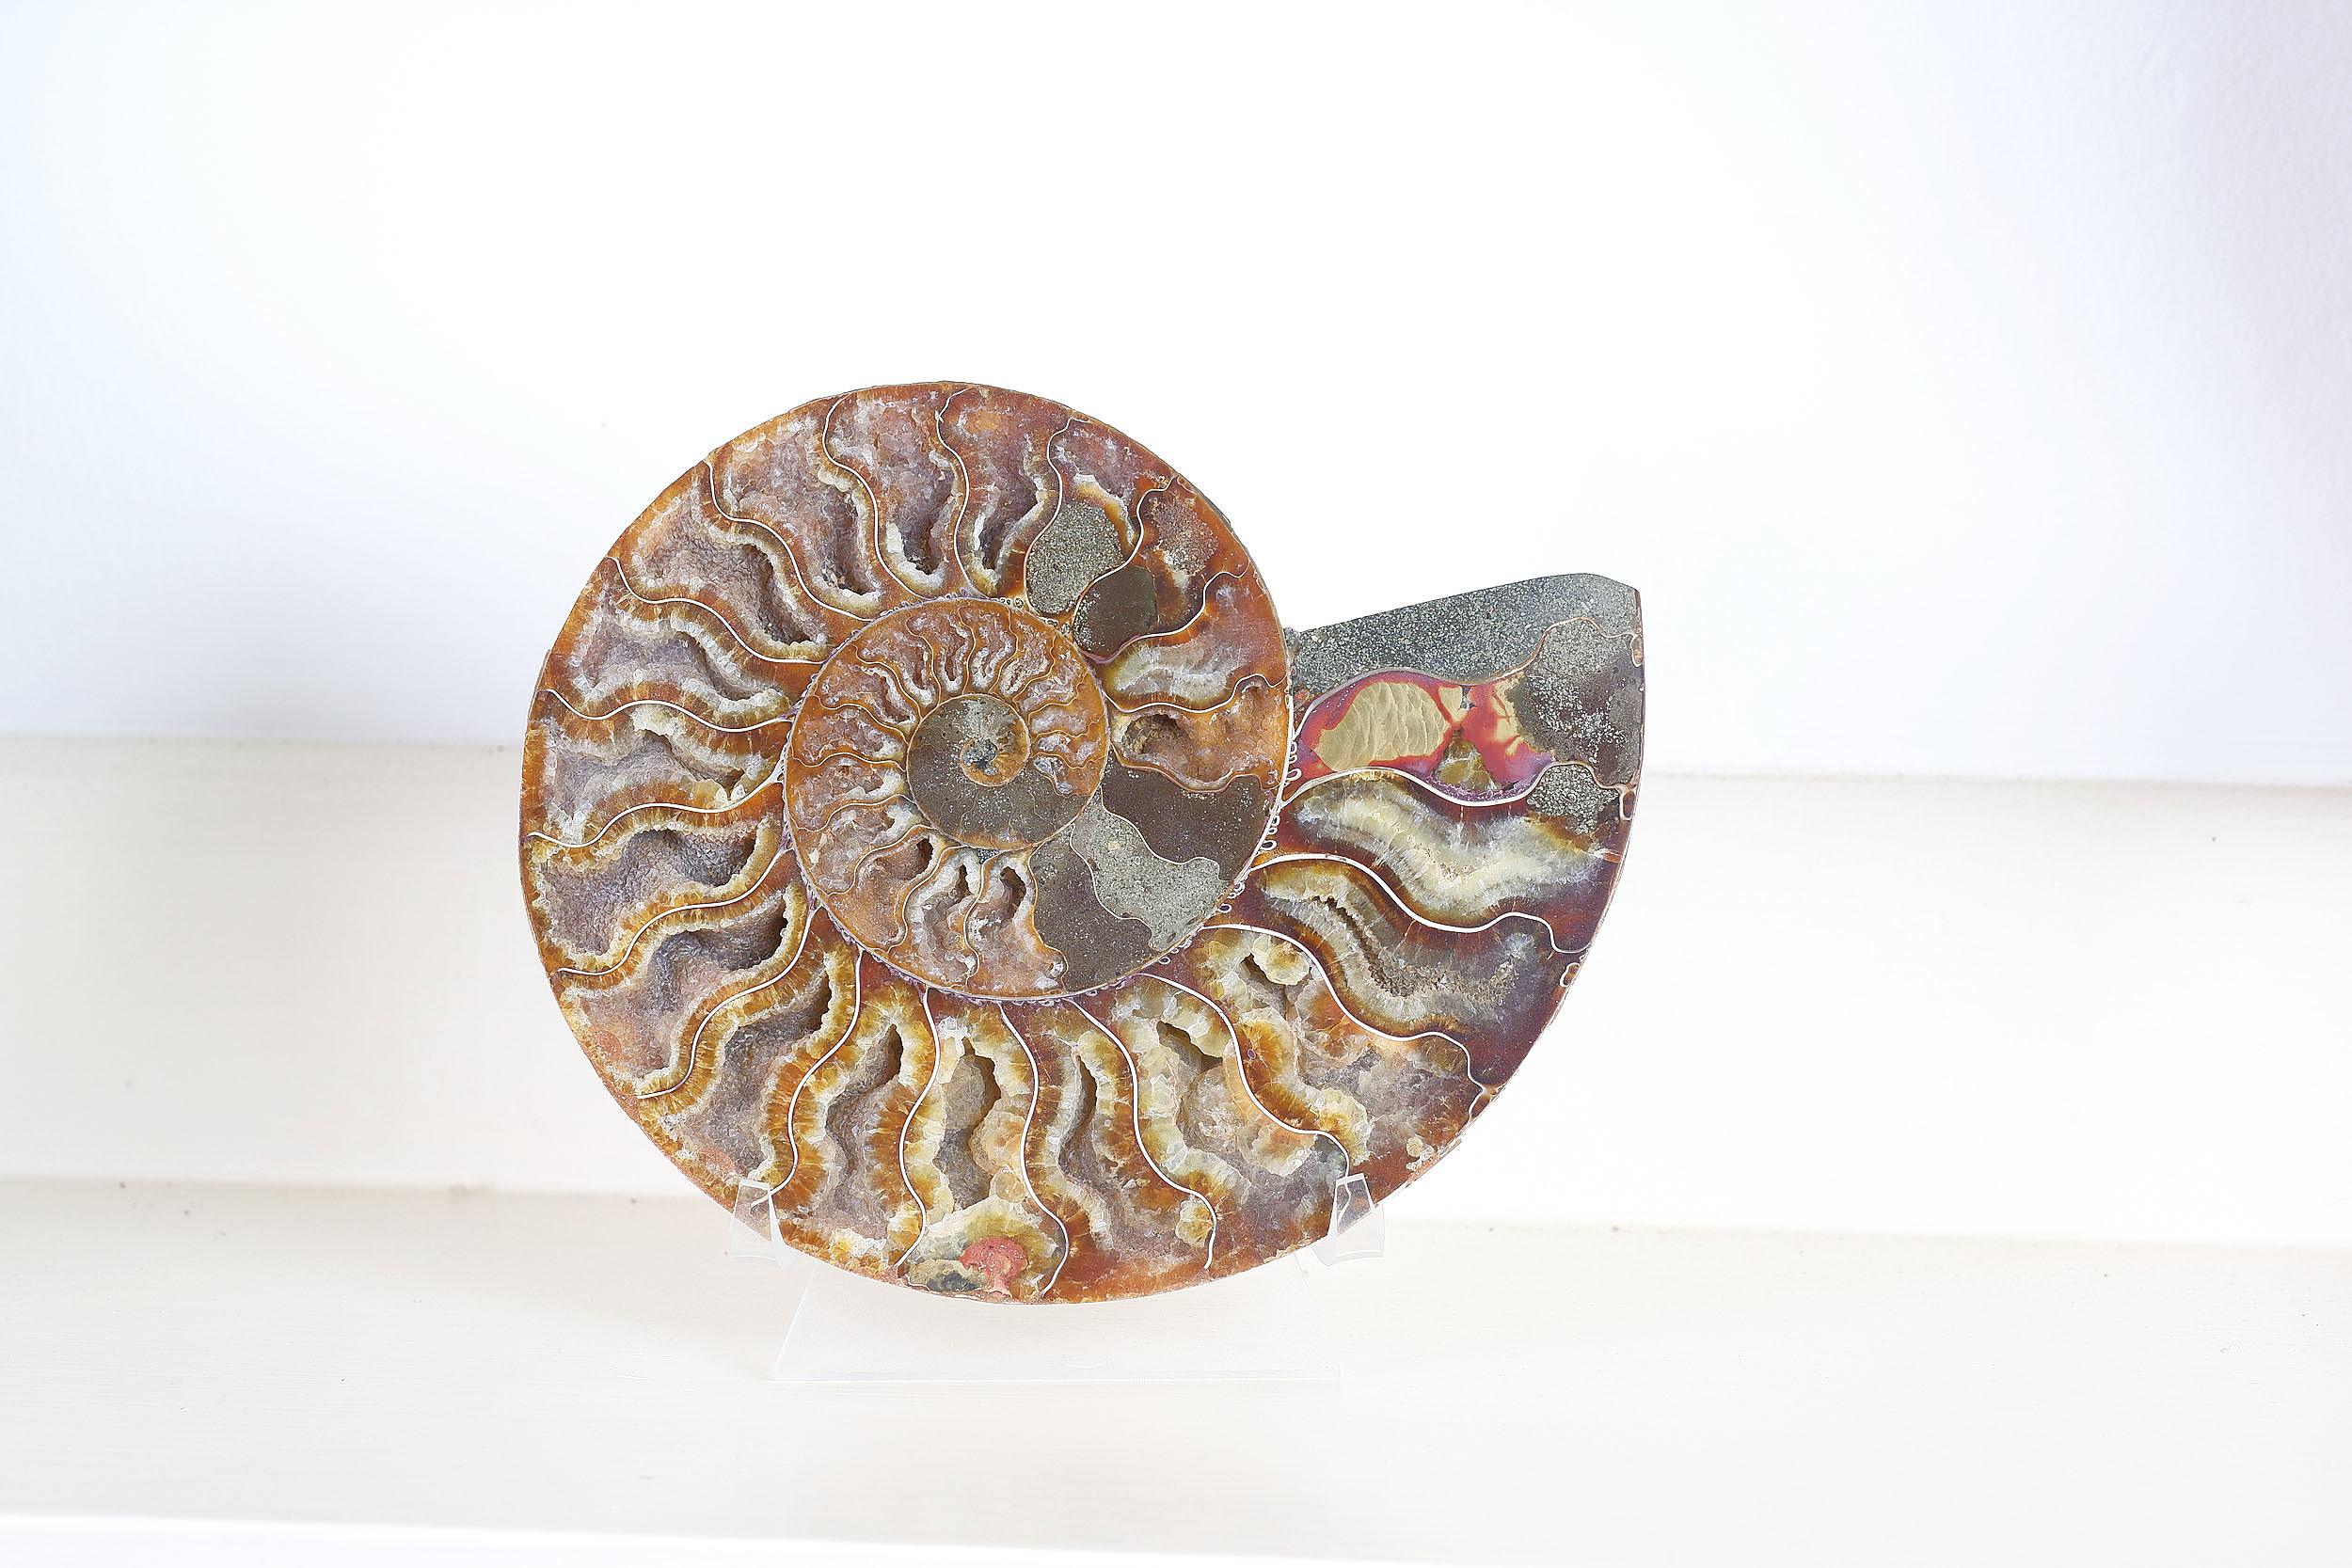 'Large Ammonite Fossil'